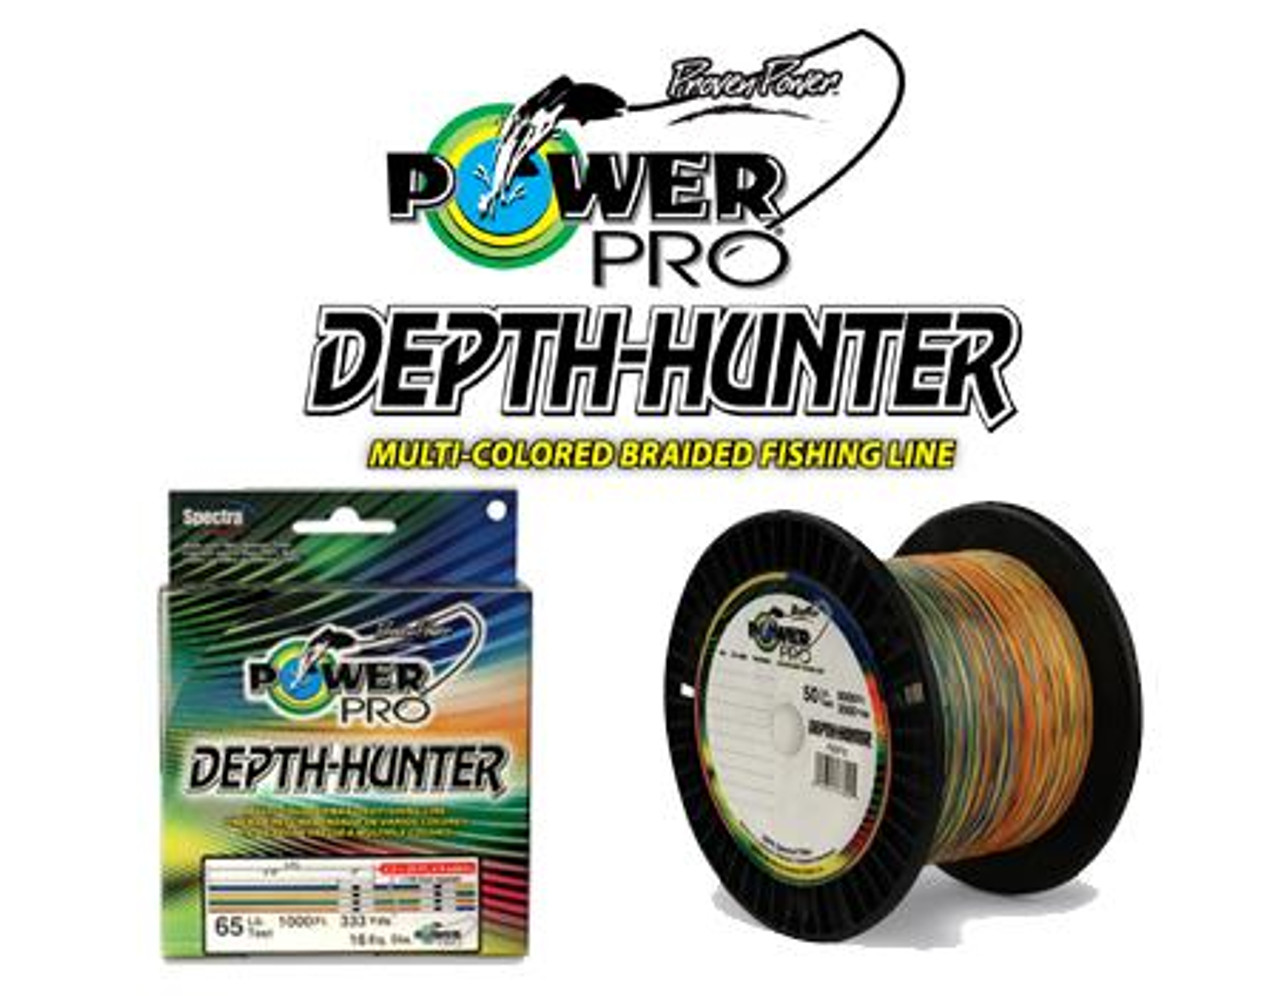 PowerPro Depth-Hunter Offshore Multi-colored Braided Fishing Line - 1000  yd. Spool - 65 lb. Test - Melton Tackle